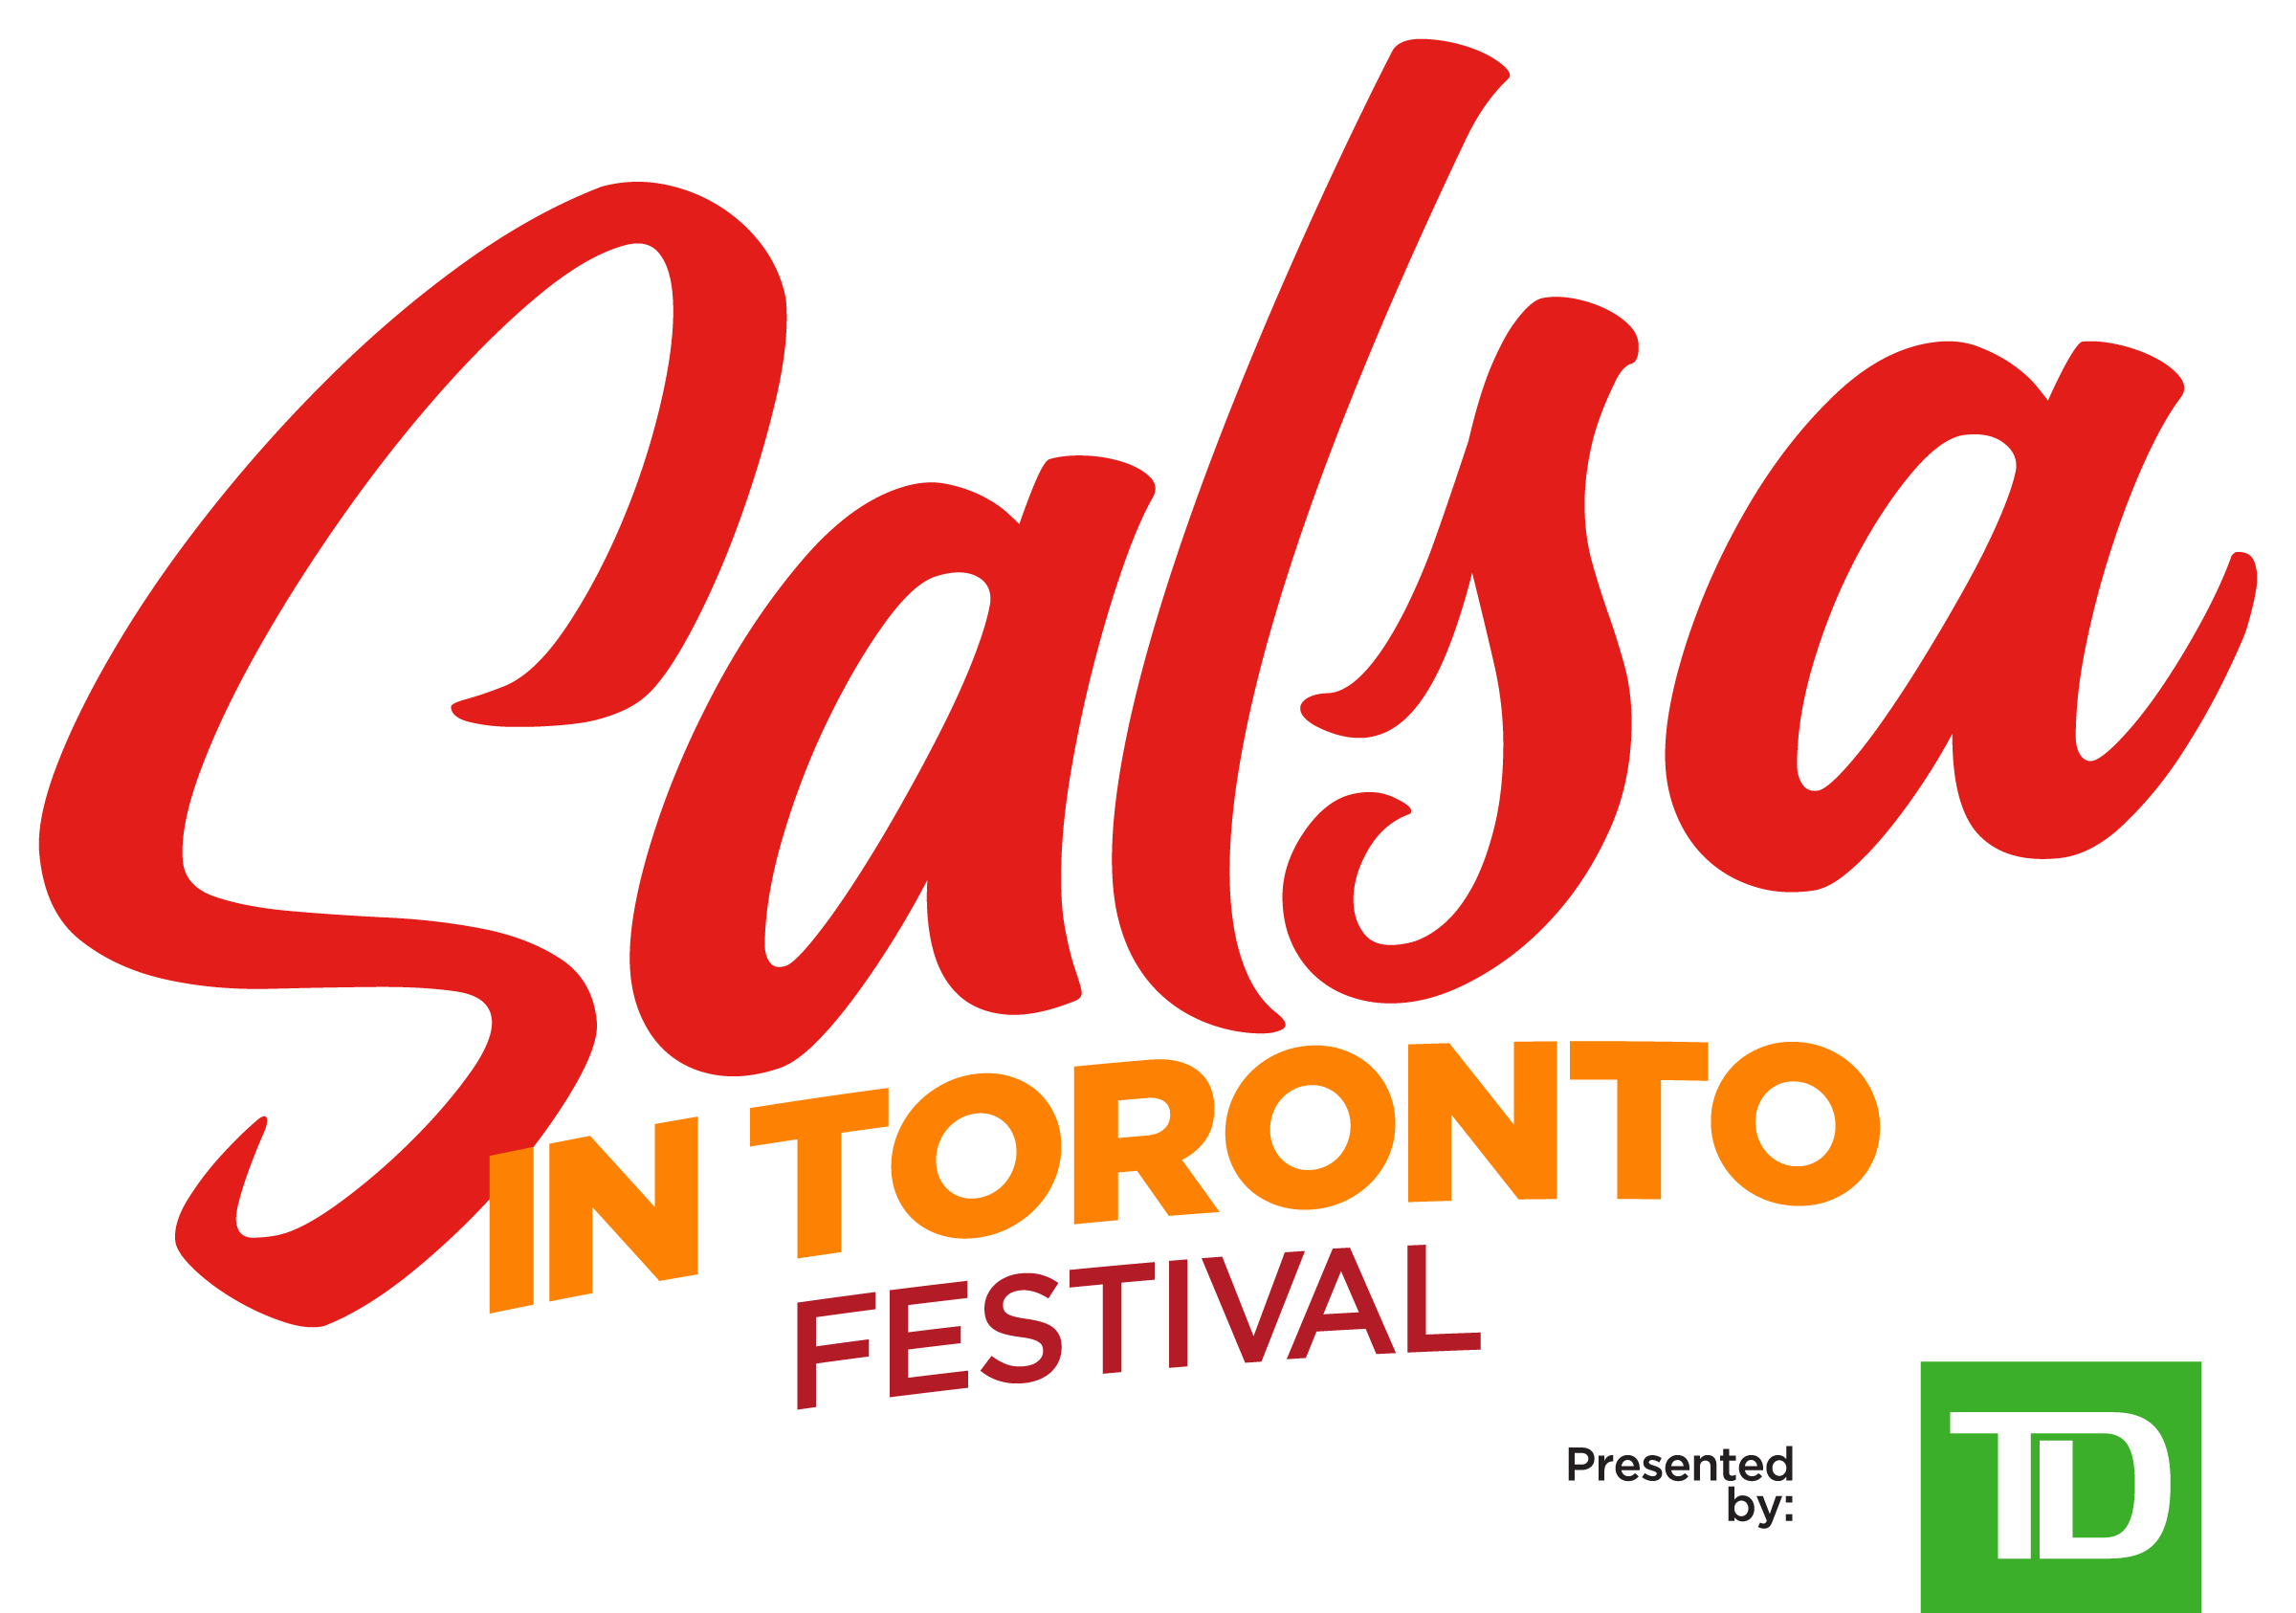 Salsa Logo - Events Salsa in Toronto Festival